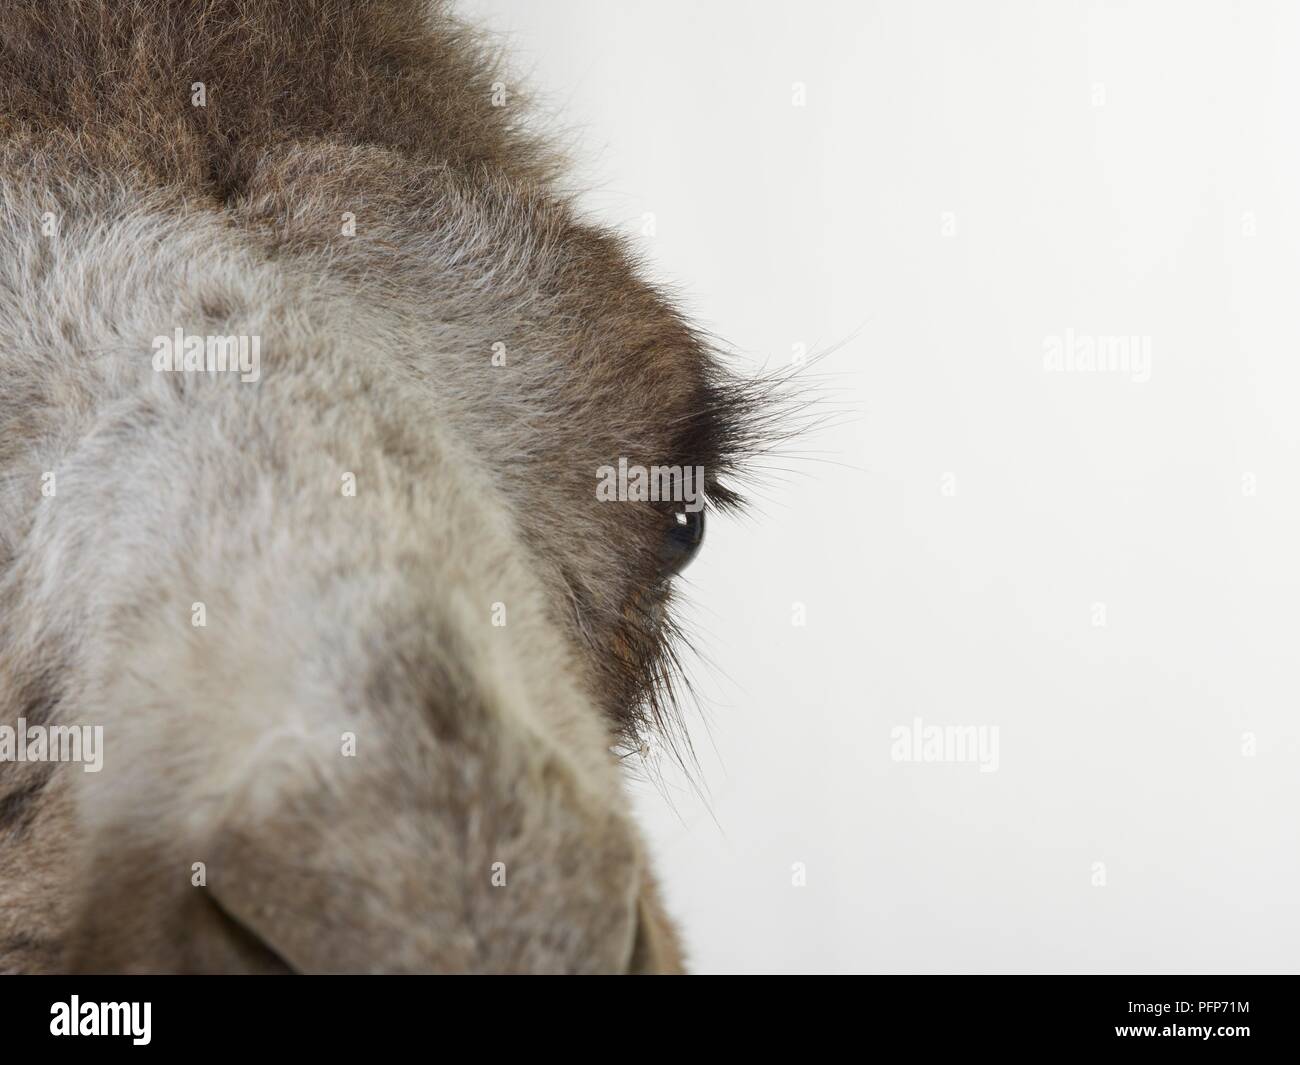 Bactrian camel (Camelus bactrianus), close-up sulla testa Foto Stock